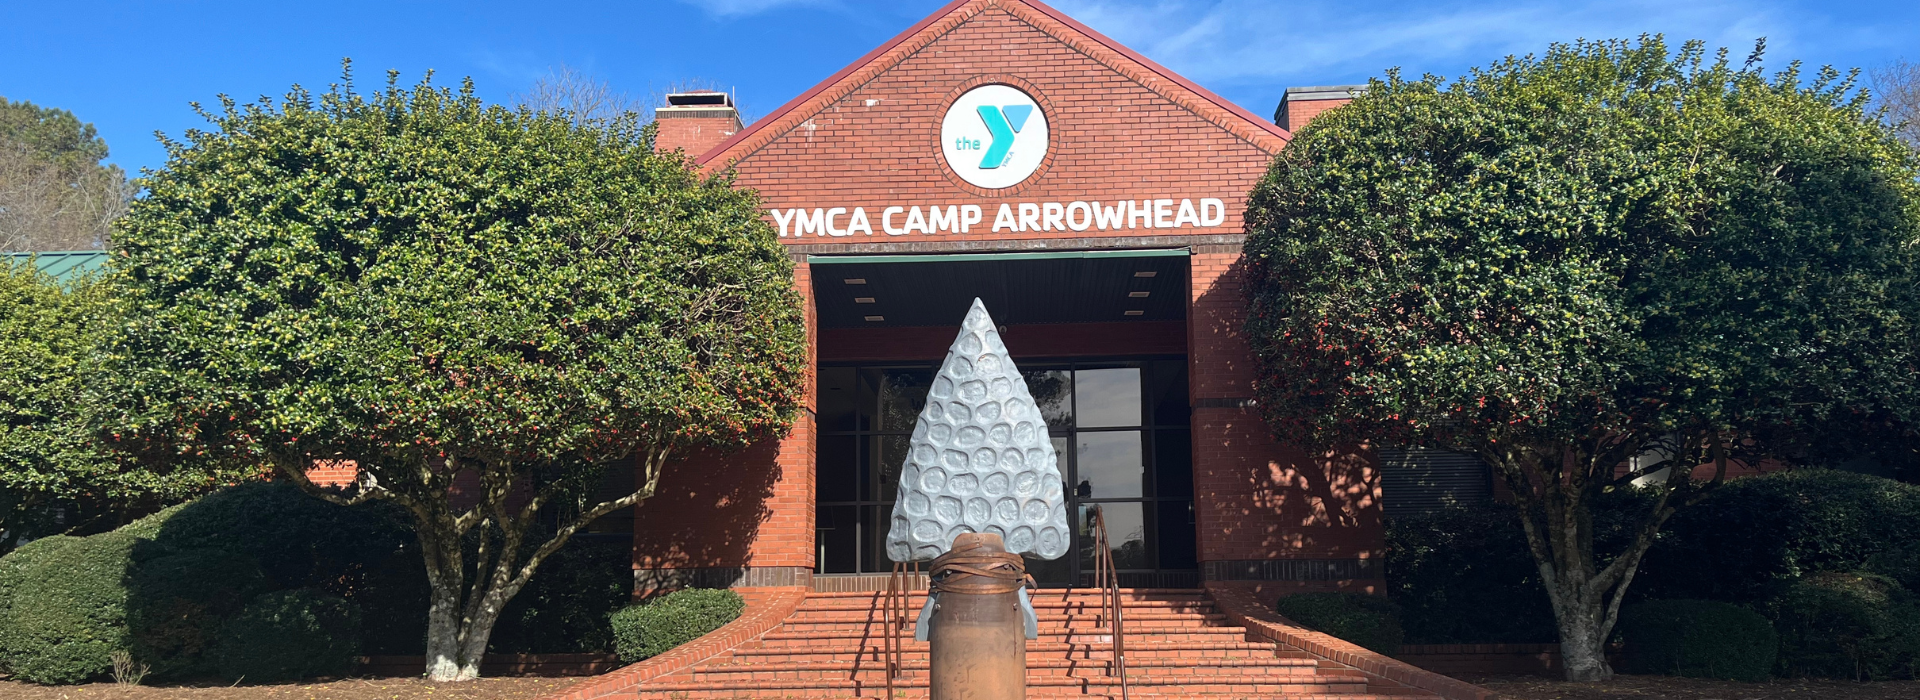 YMCA Camp Arrowhead in Suffolk, VA